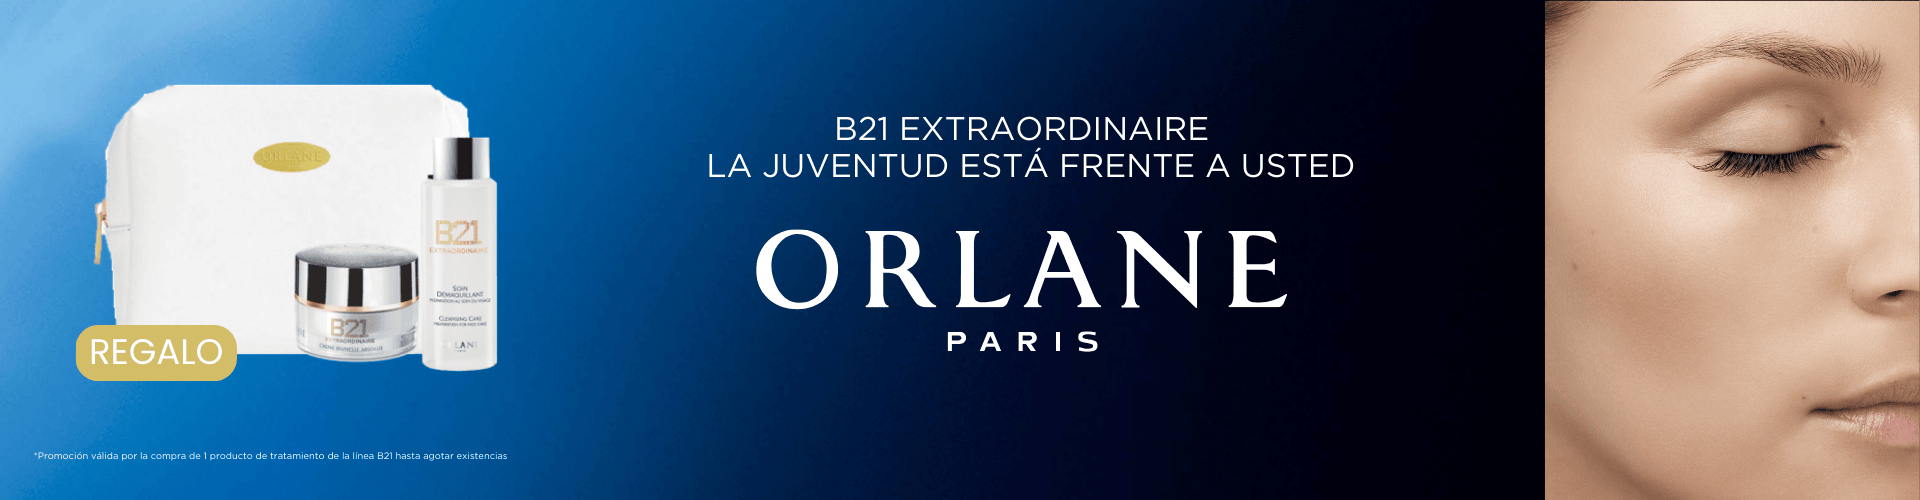 Orlane | B21 Extraordinaire | Consigue tu Regalo | Prieto.es